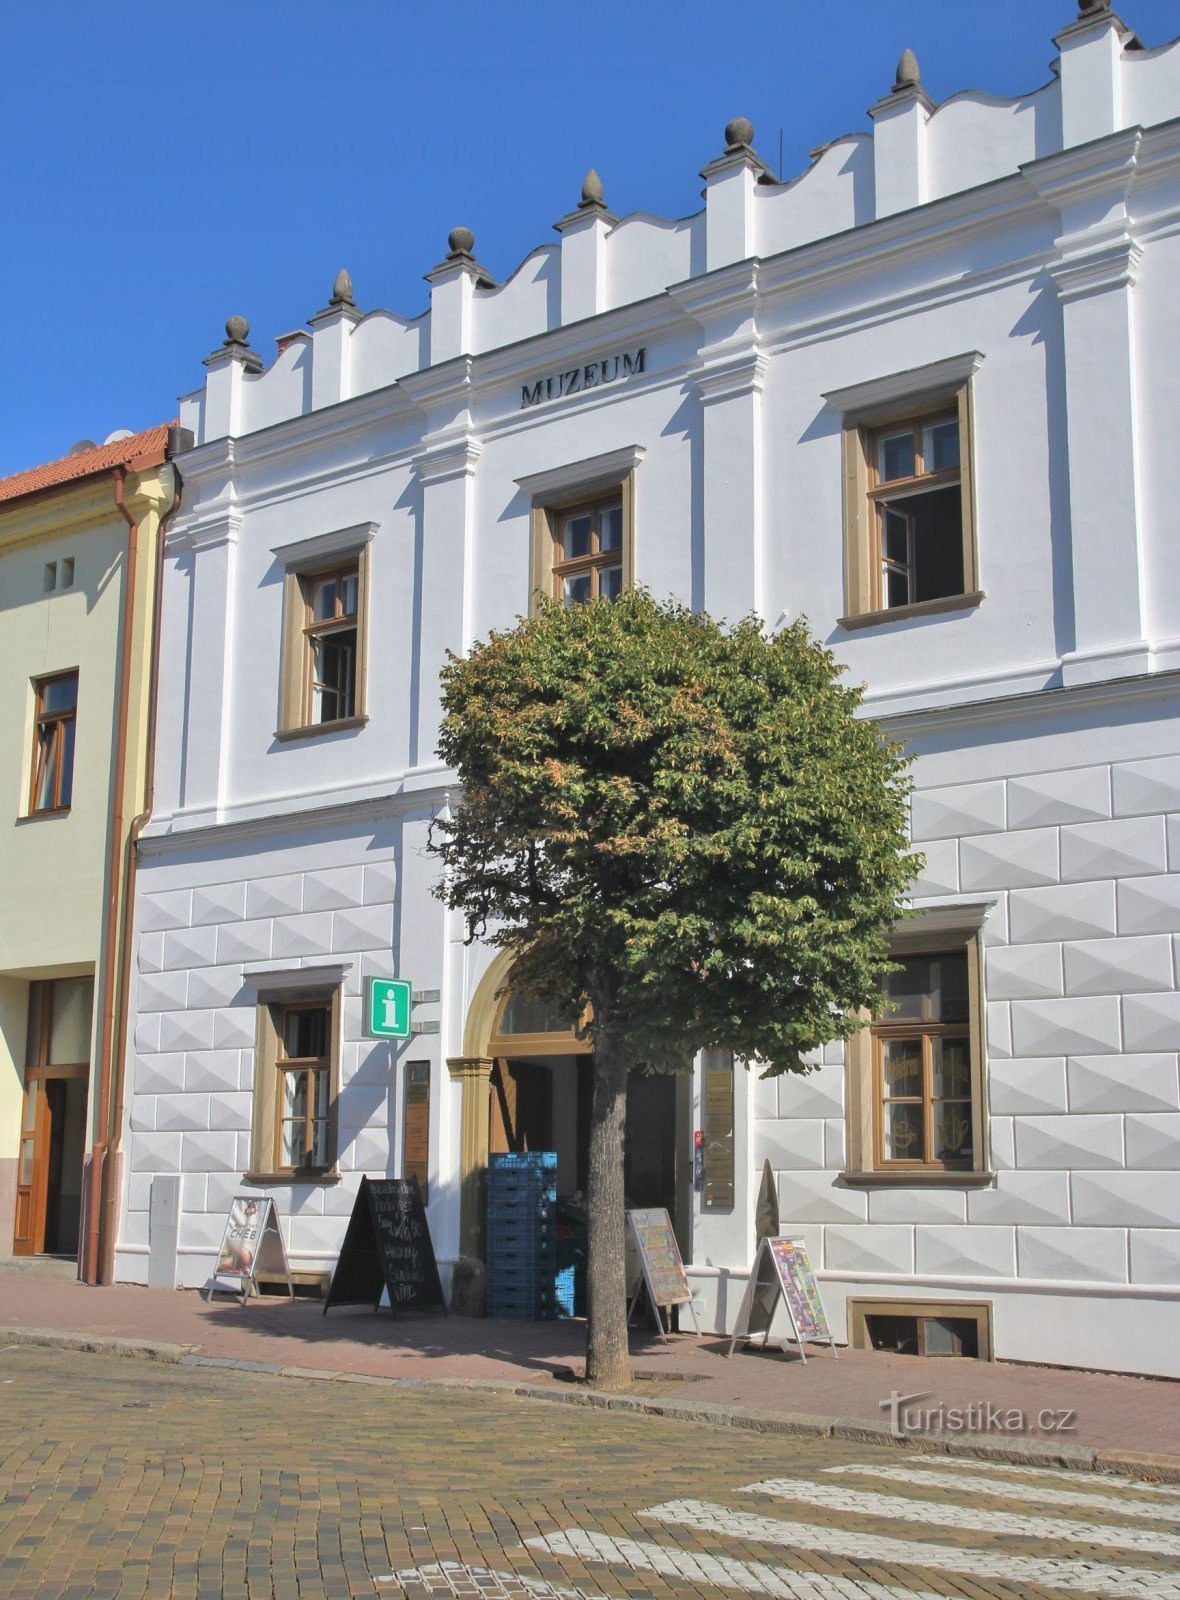 Moravský Krumlov - Centro informazioni municipale